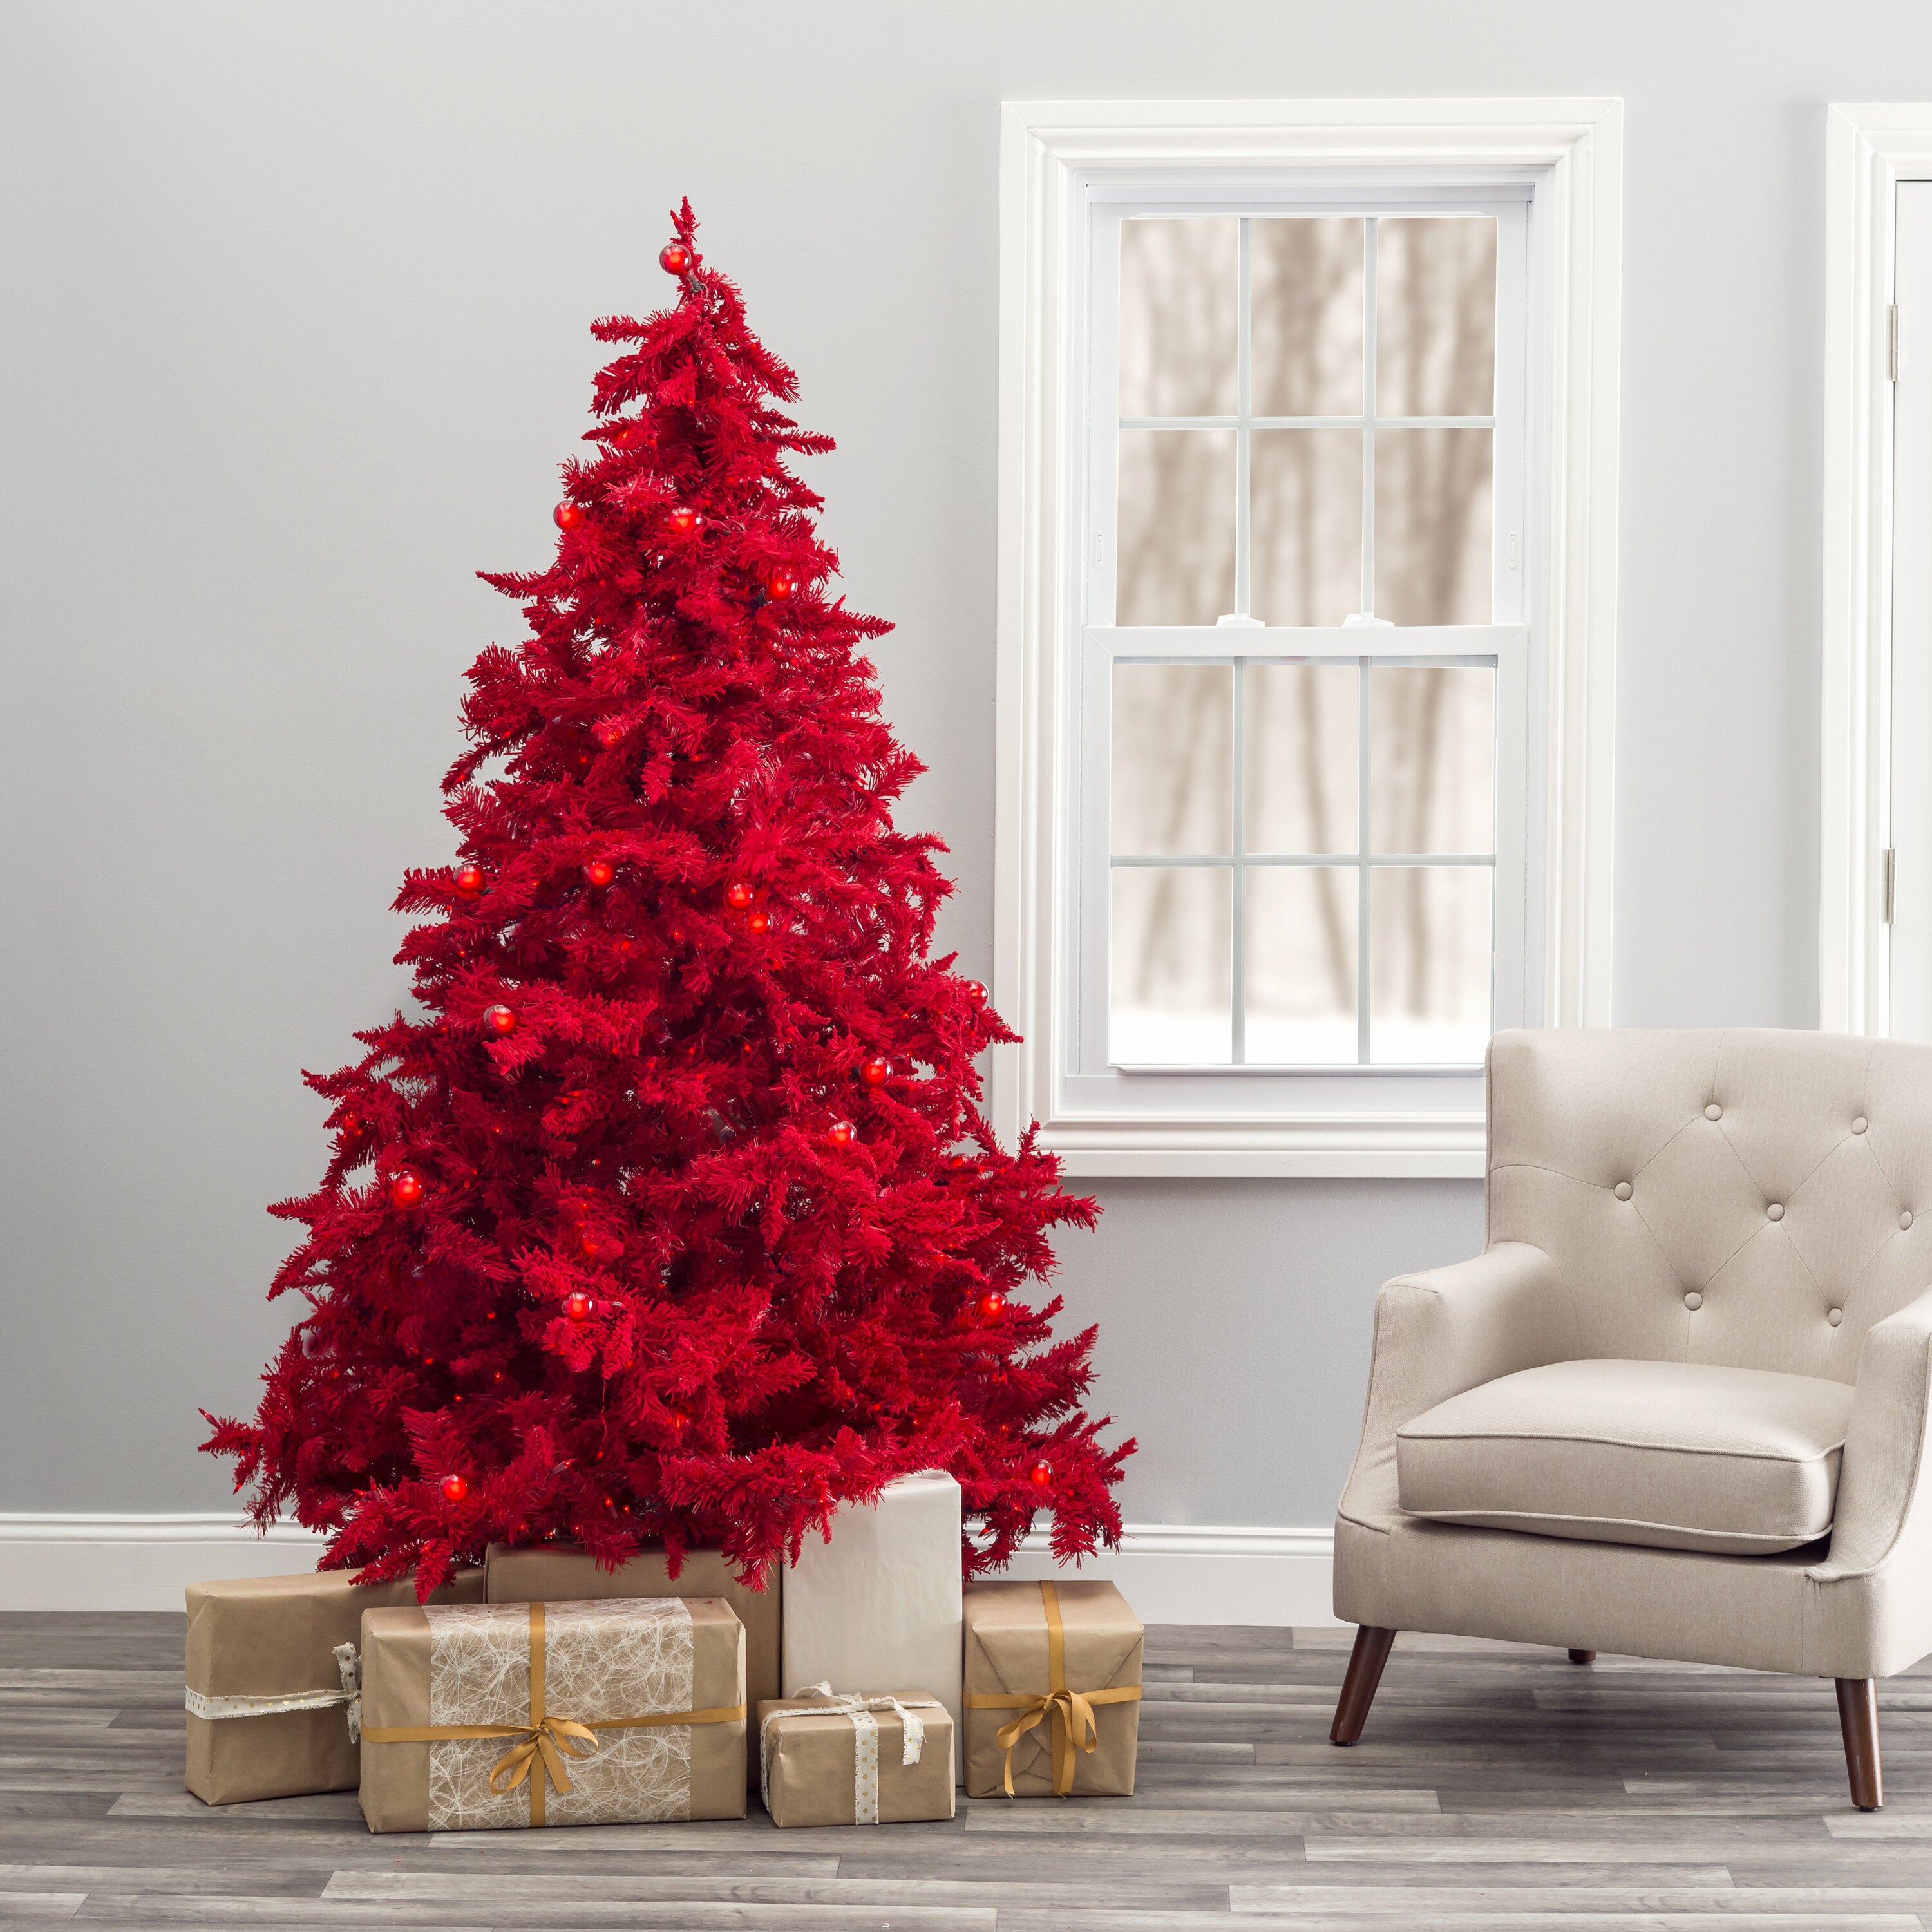 The 5' Lighted Artificial Christmas Tree & Reviews | Wayfair